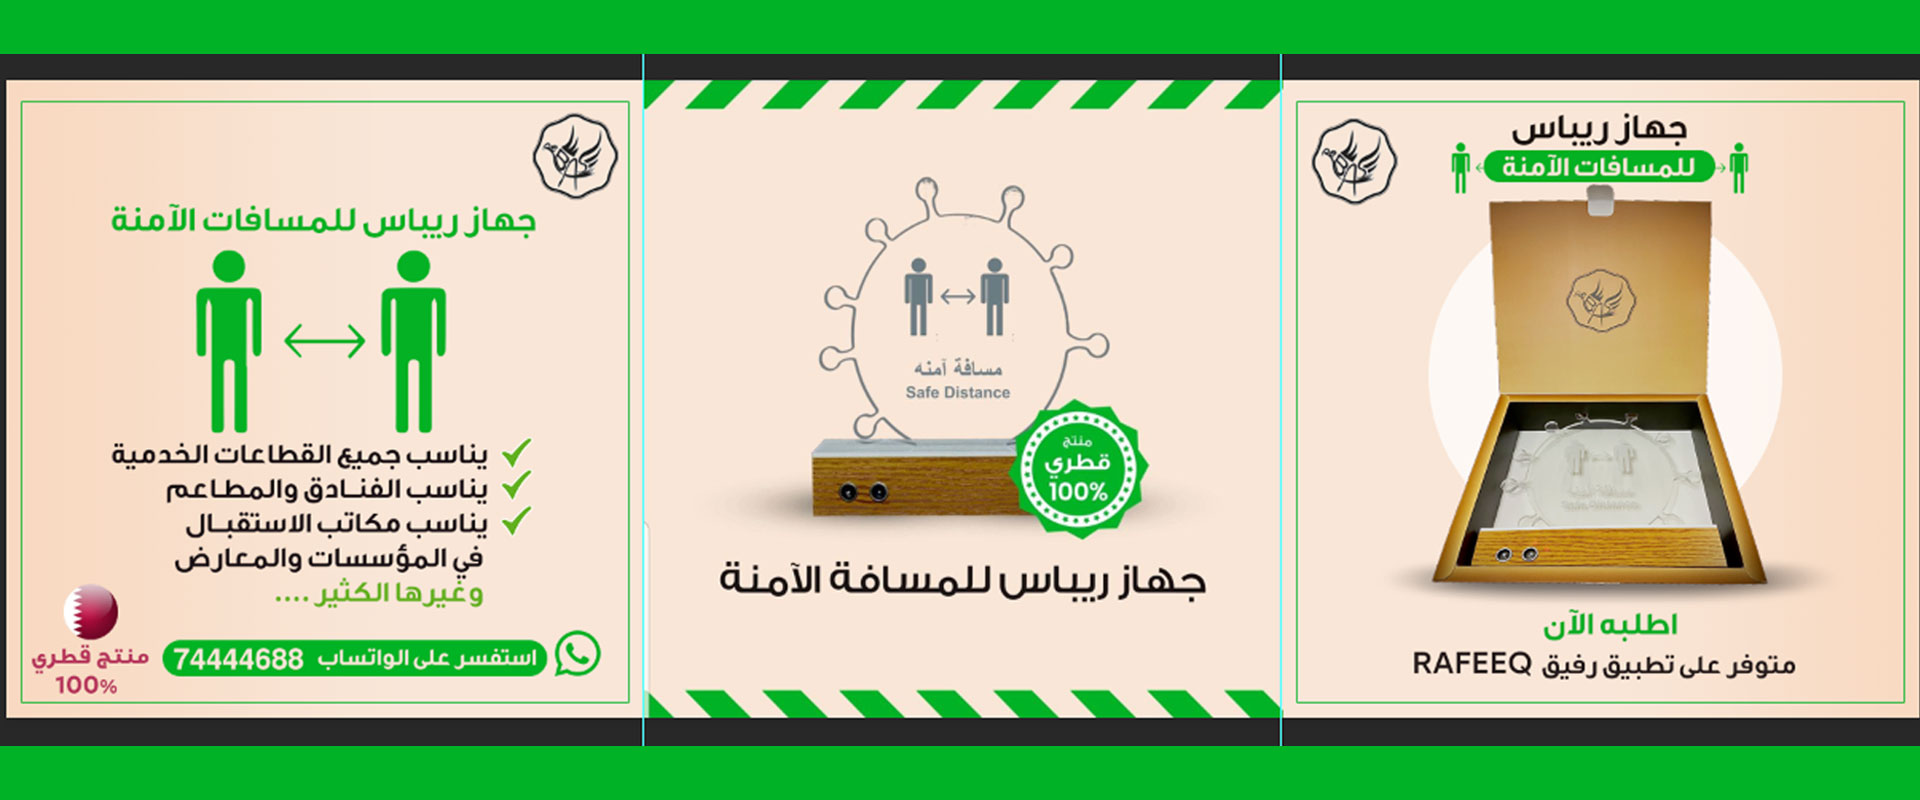 REBAS Safe Distance Device 100% Qatari product 